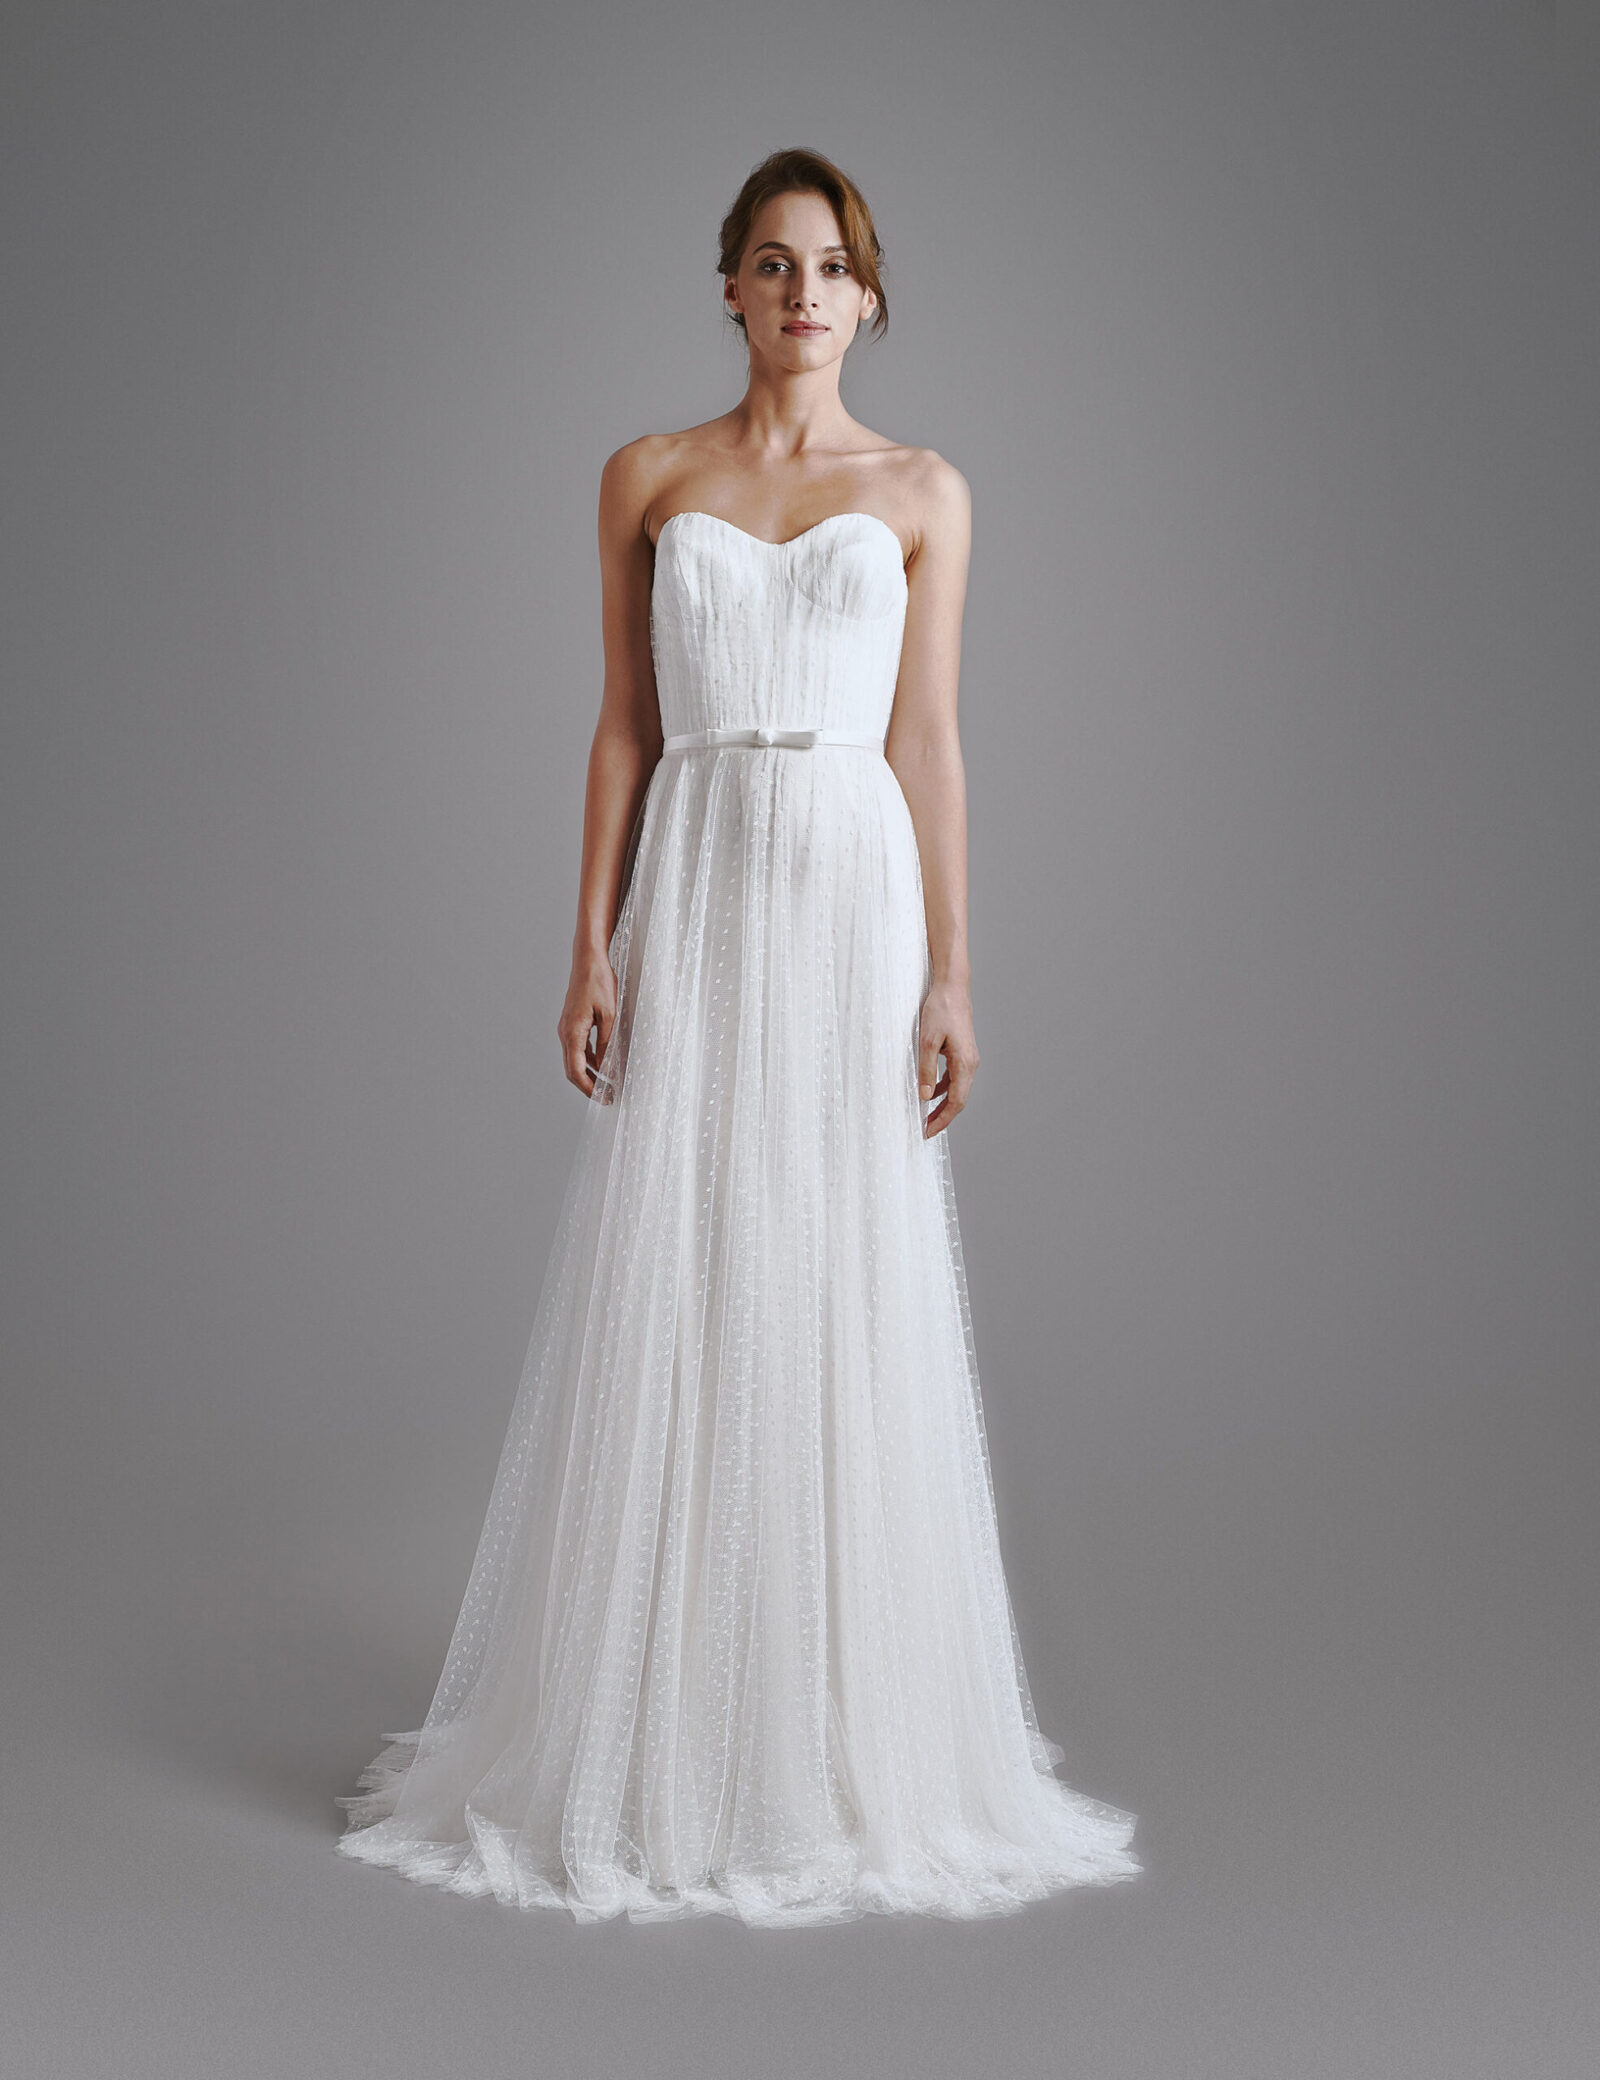 Modern wedding dress BHARB-BOXWOOD-BH2020-0014-001-tall BRAUTKLEID - Modernes Hochzeitskleid